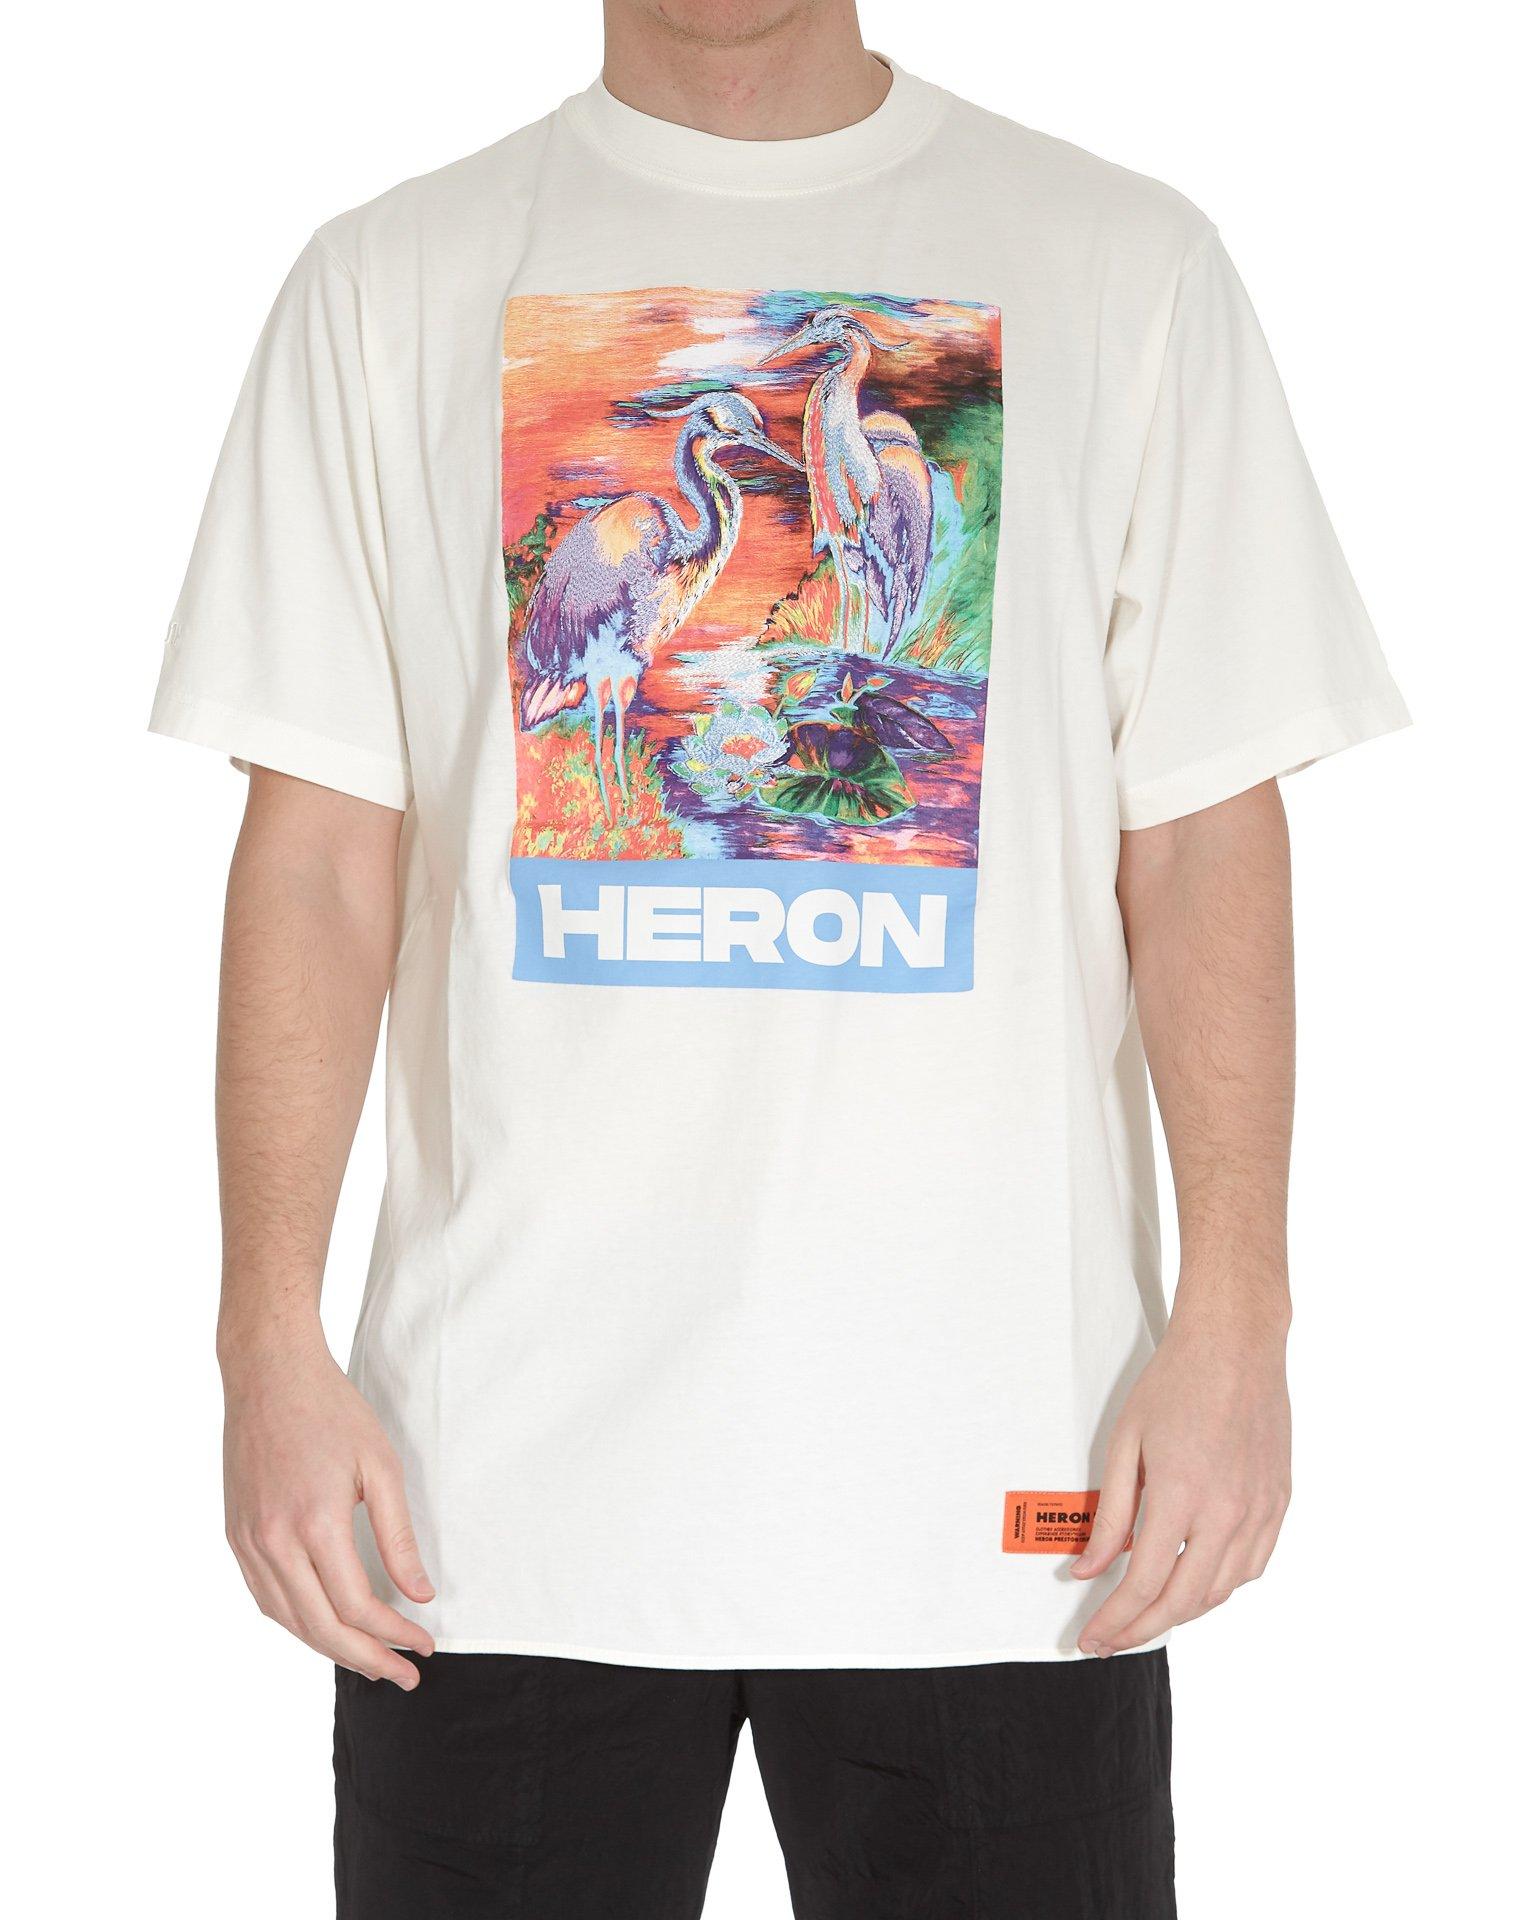 Heron Preston Cotton Graphic Printed T-shirt in White for Men - Lyst